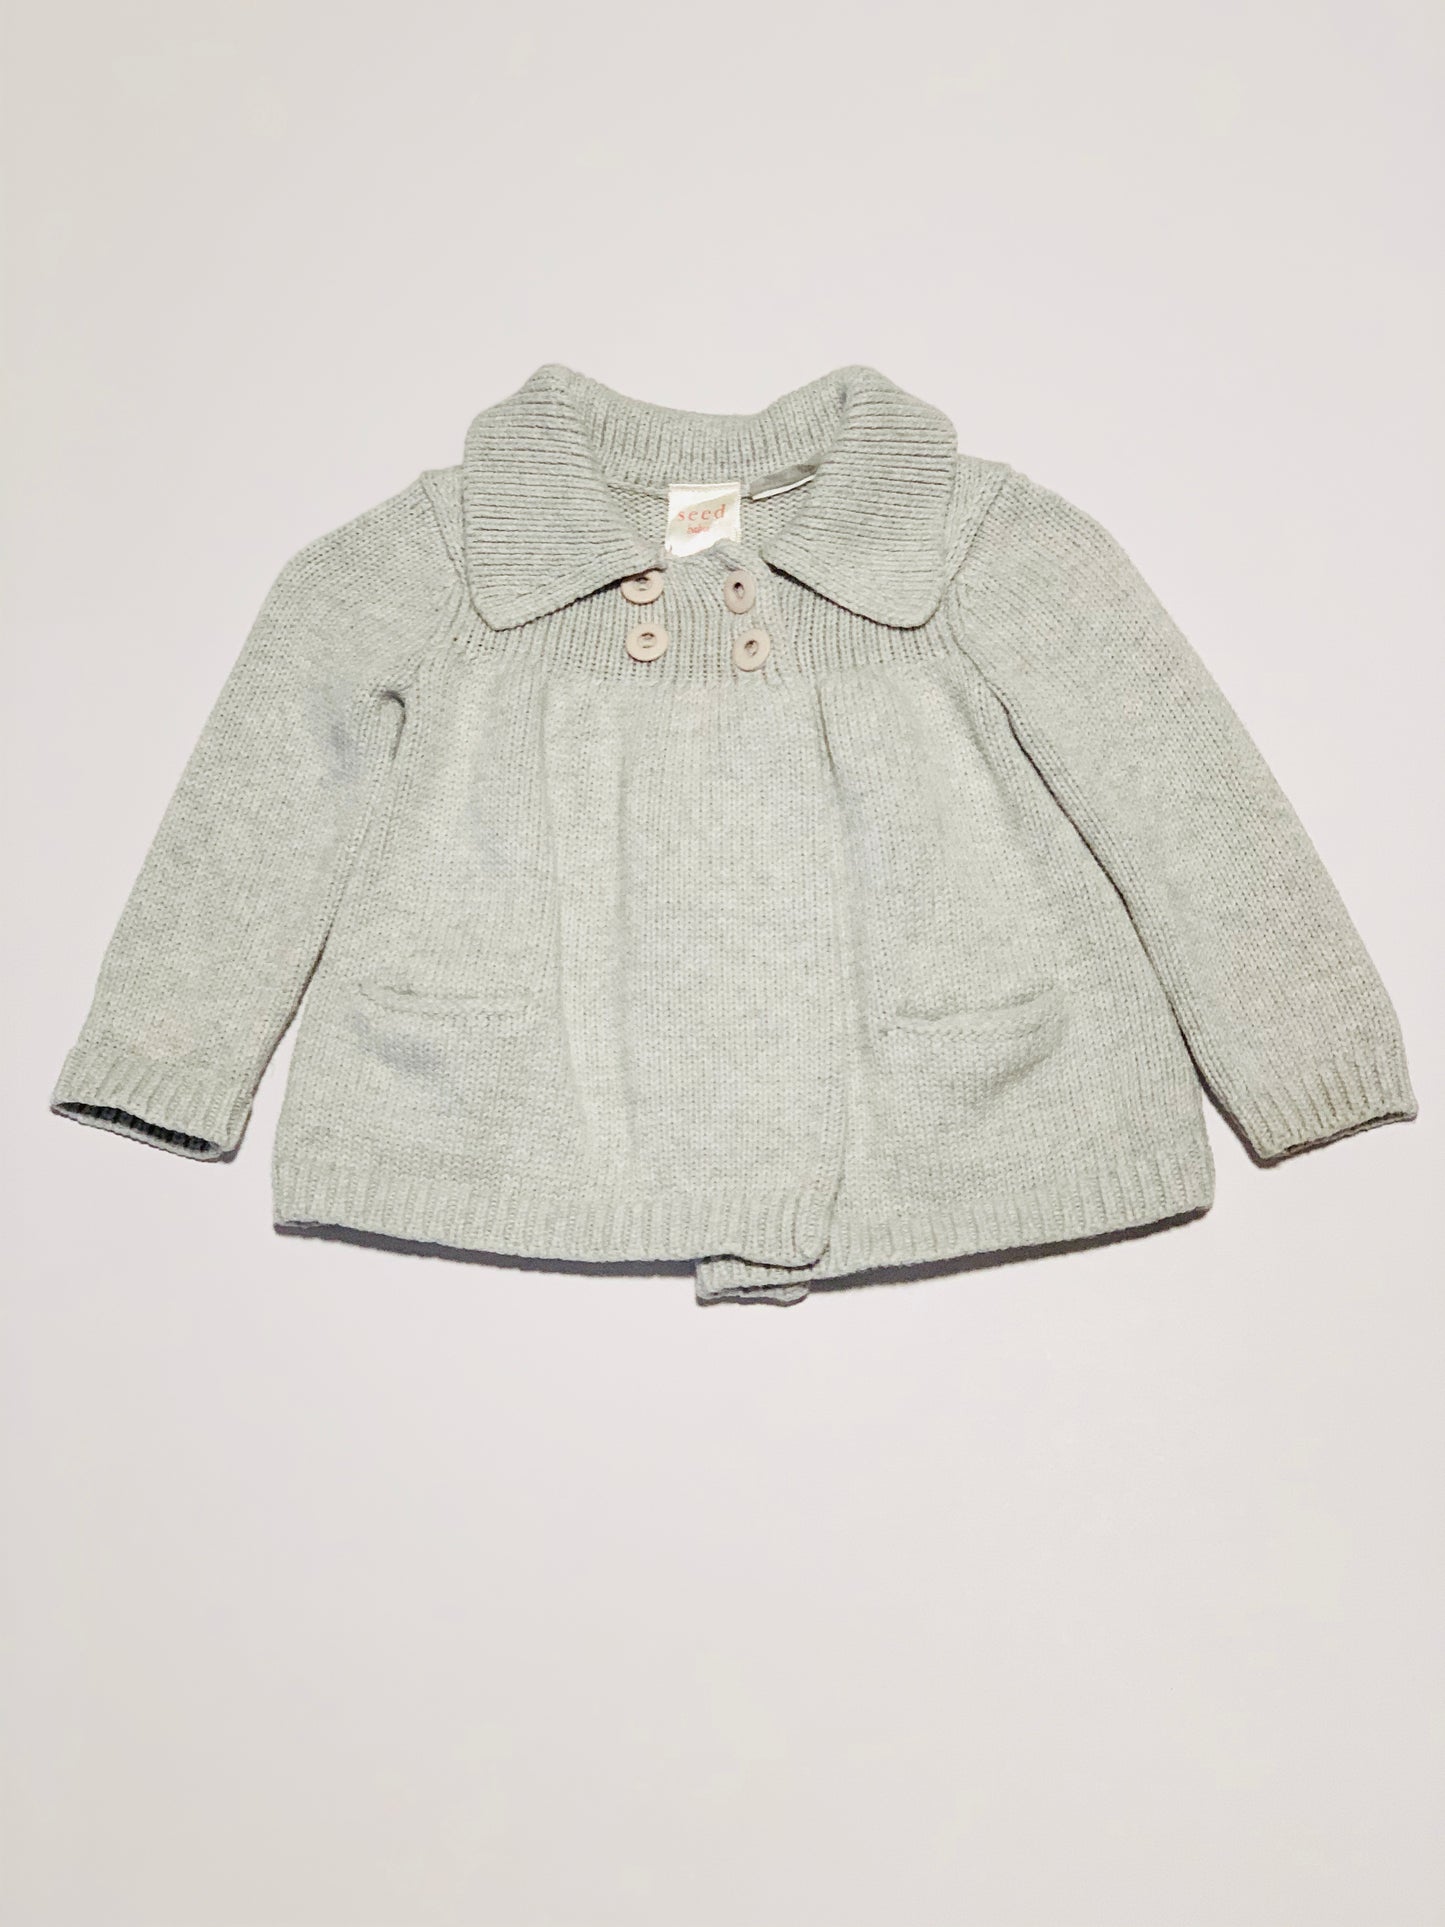 Grey knit jacket - Size 0